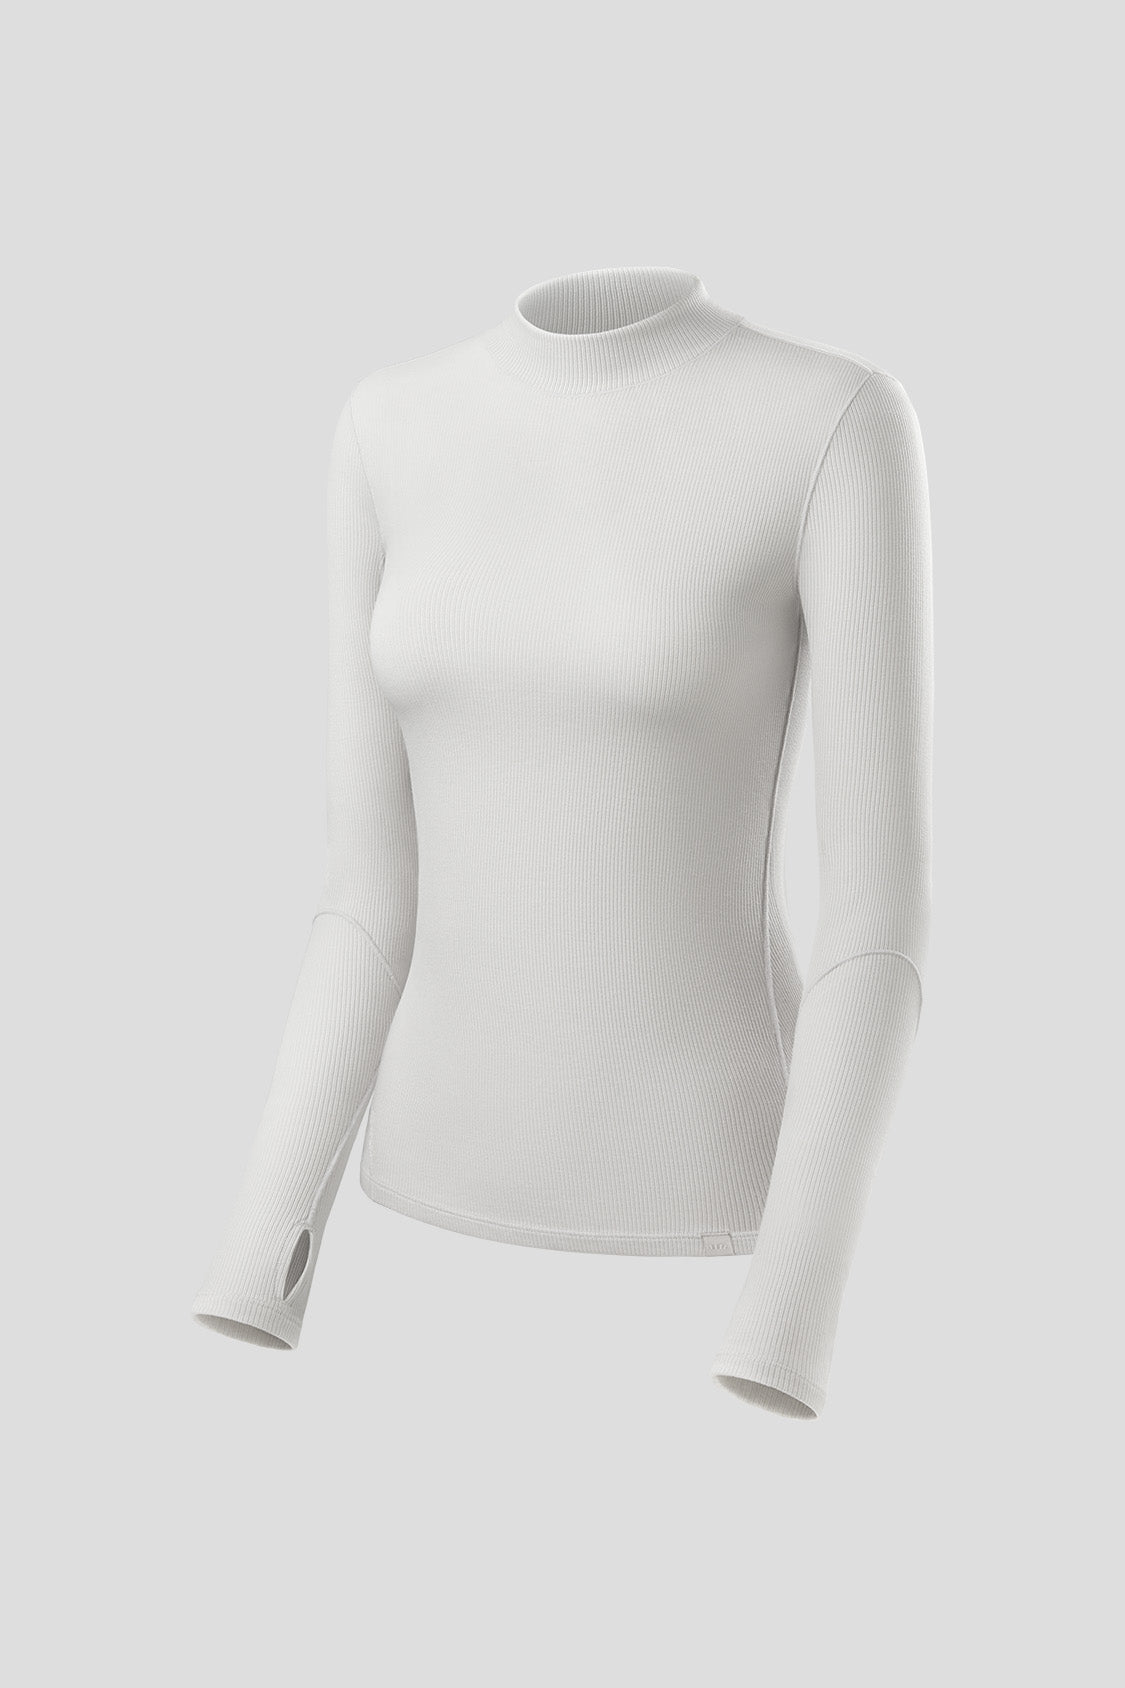 【New In】Women's Semi-Turtleneck Skin-Fit Base Layer Shirt